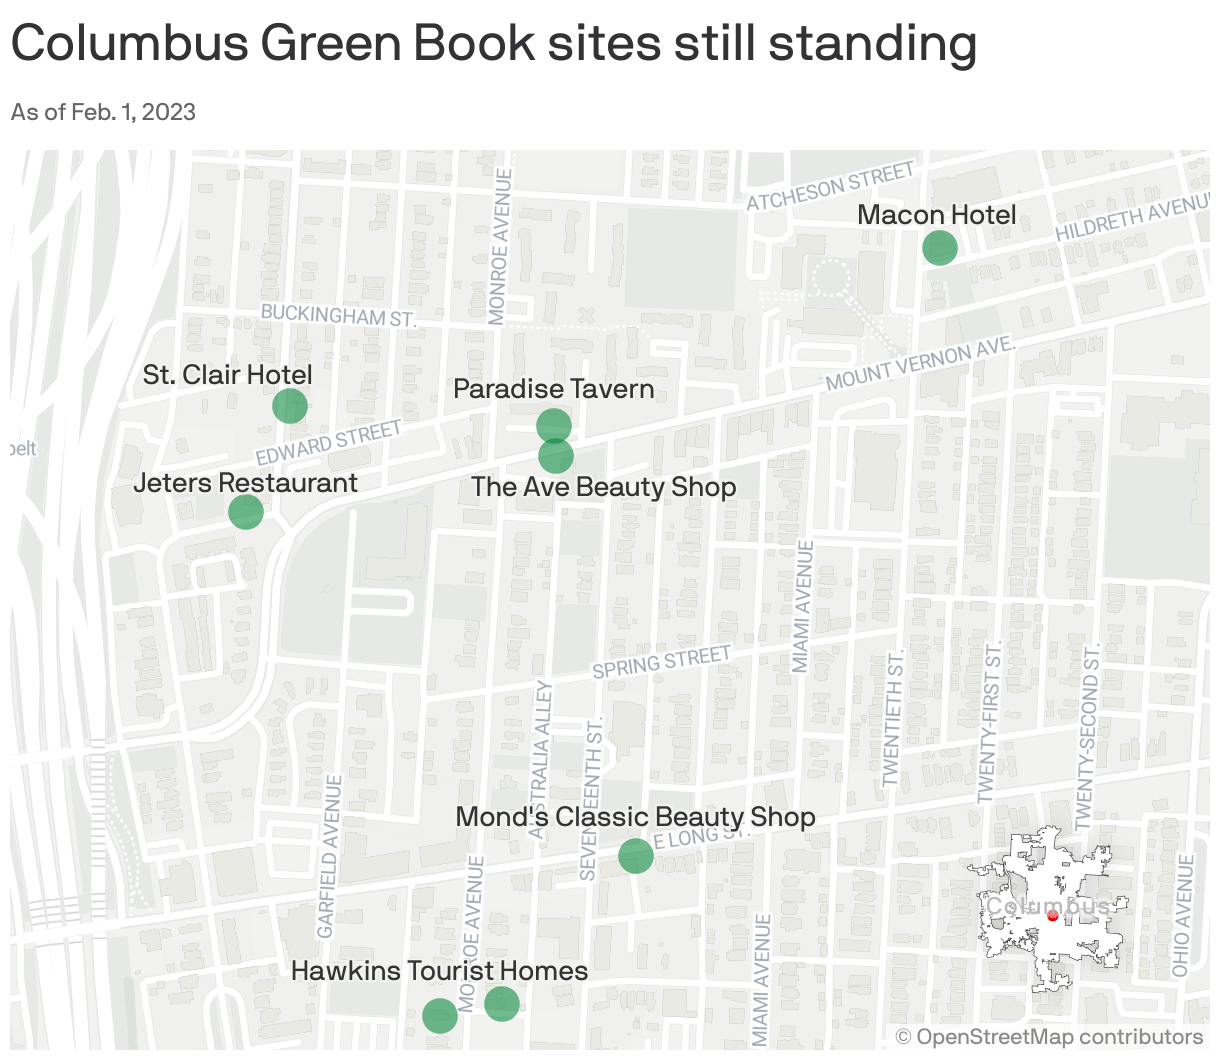 Columbus Green Book sites still standing